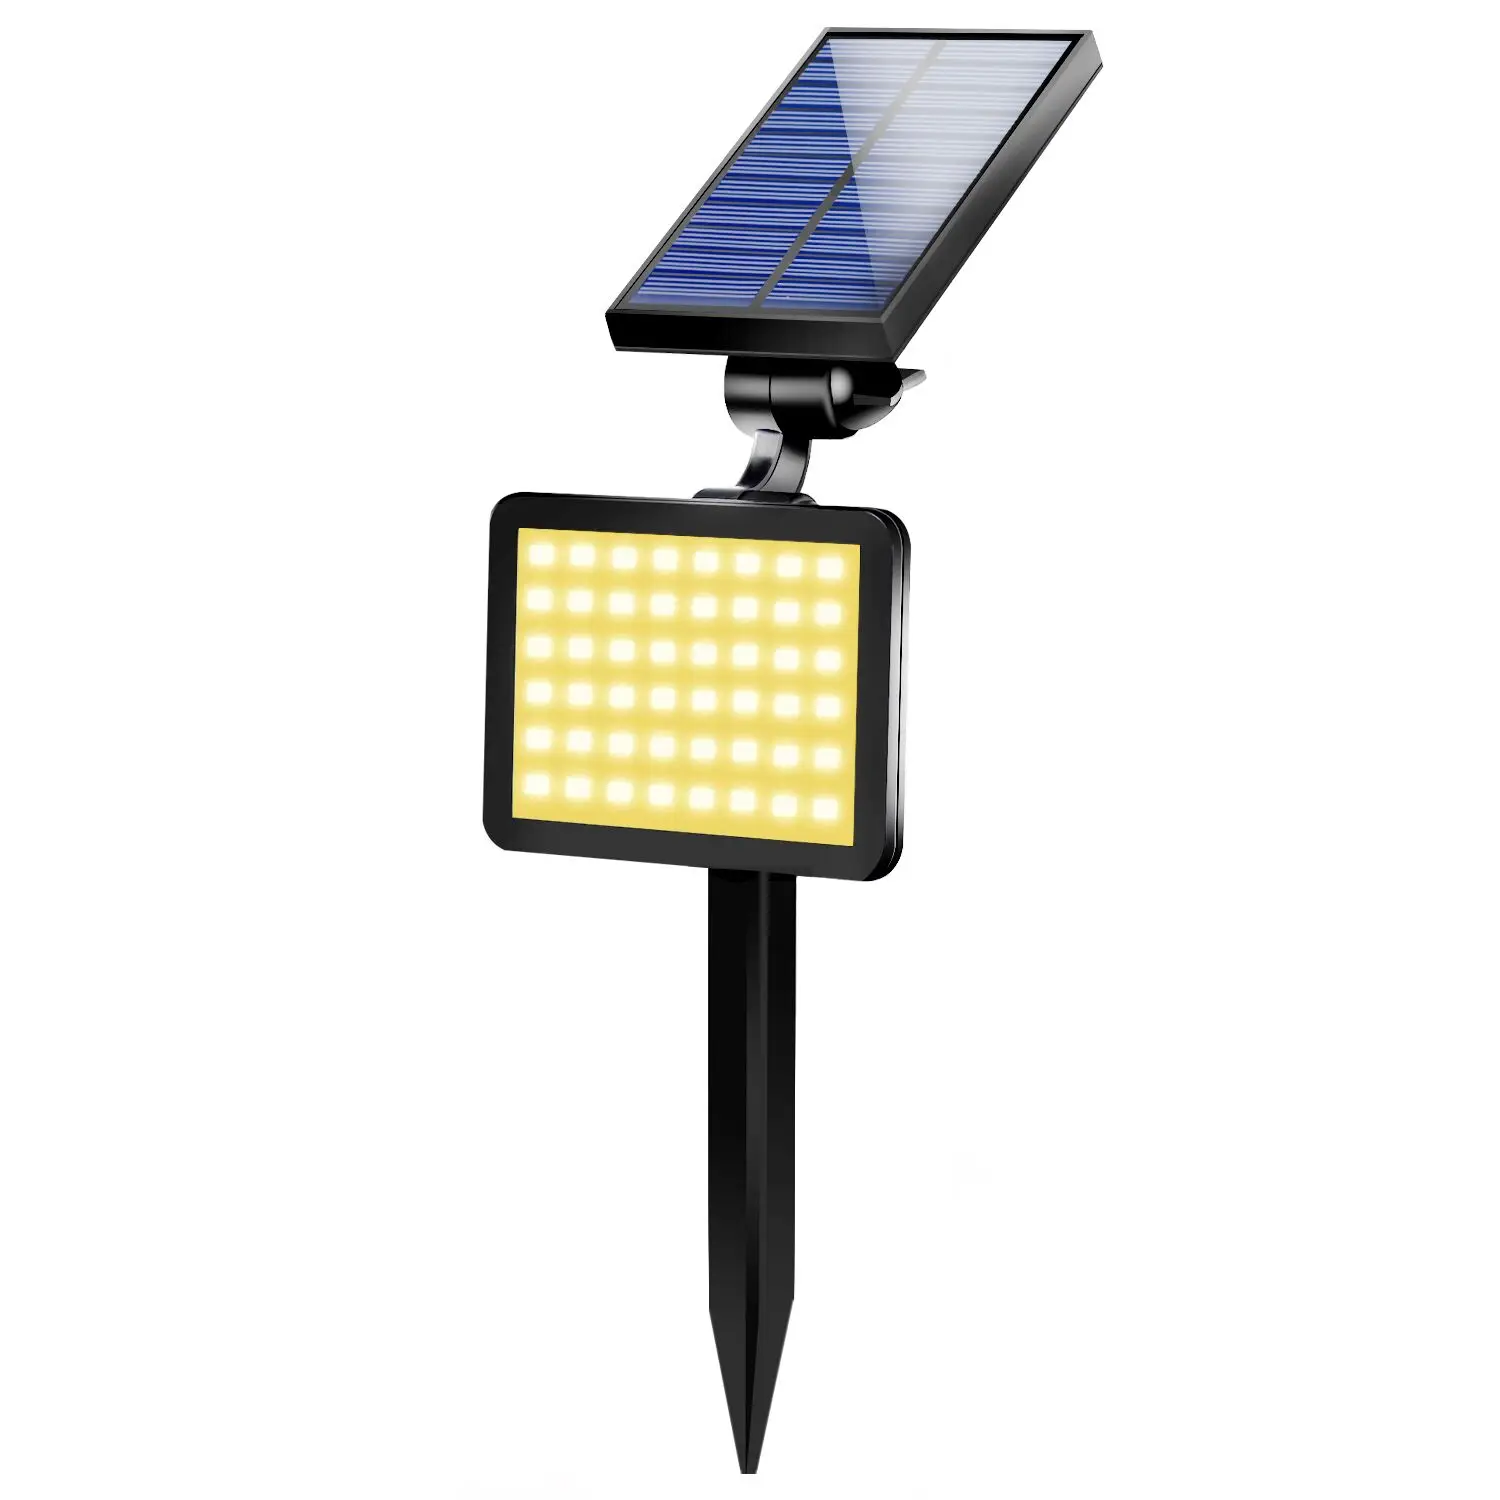 

48 Led Solar Landscape Security Lighting For Lawn Spotlight 2-in-1 Adjustable Waterproof